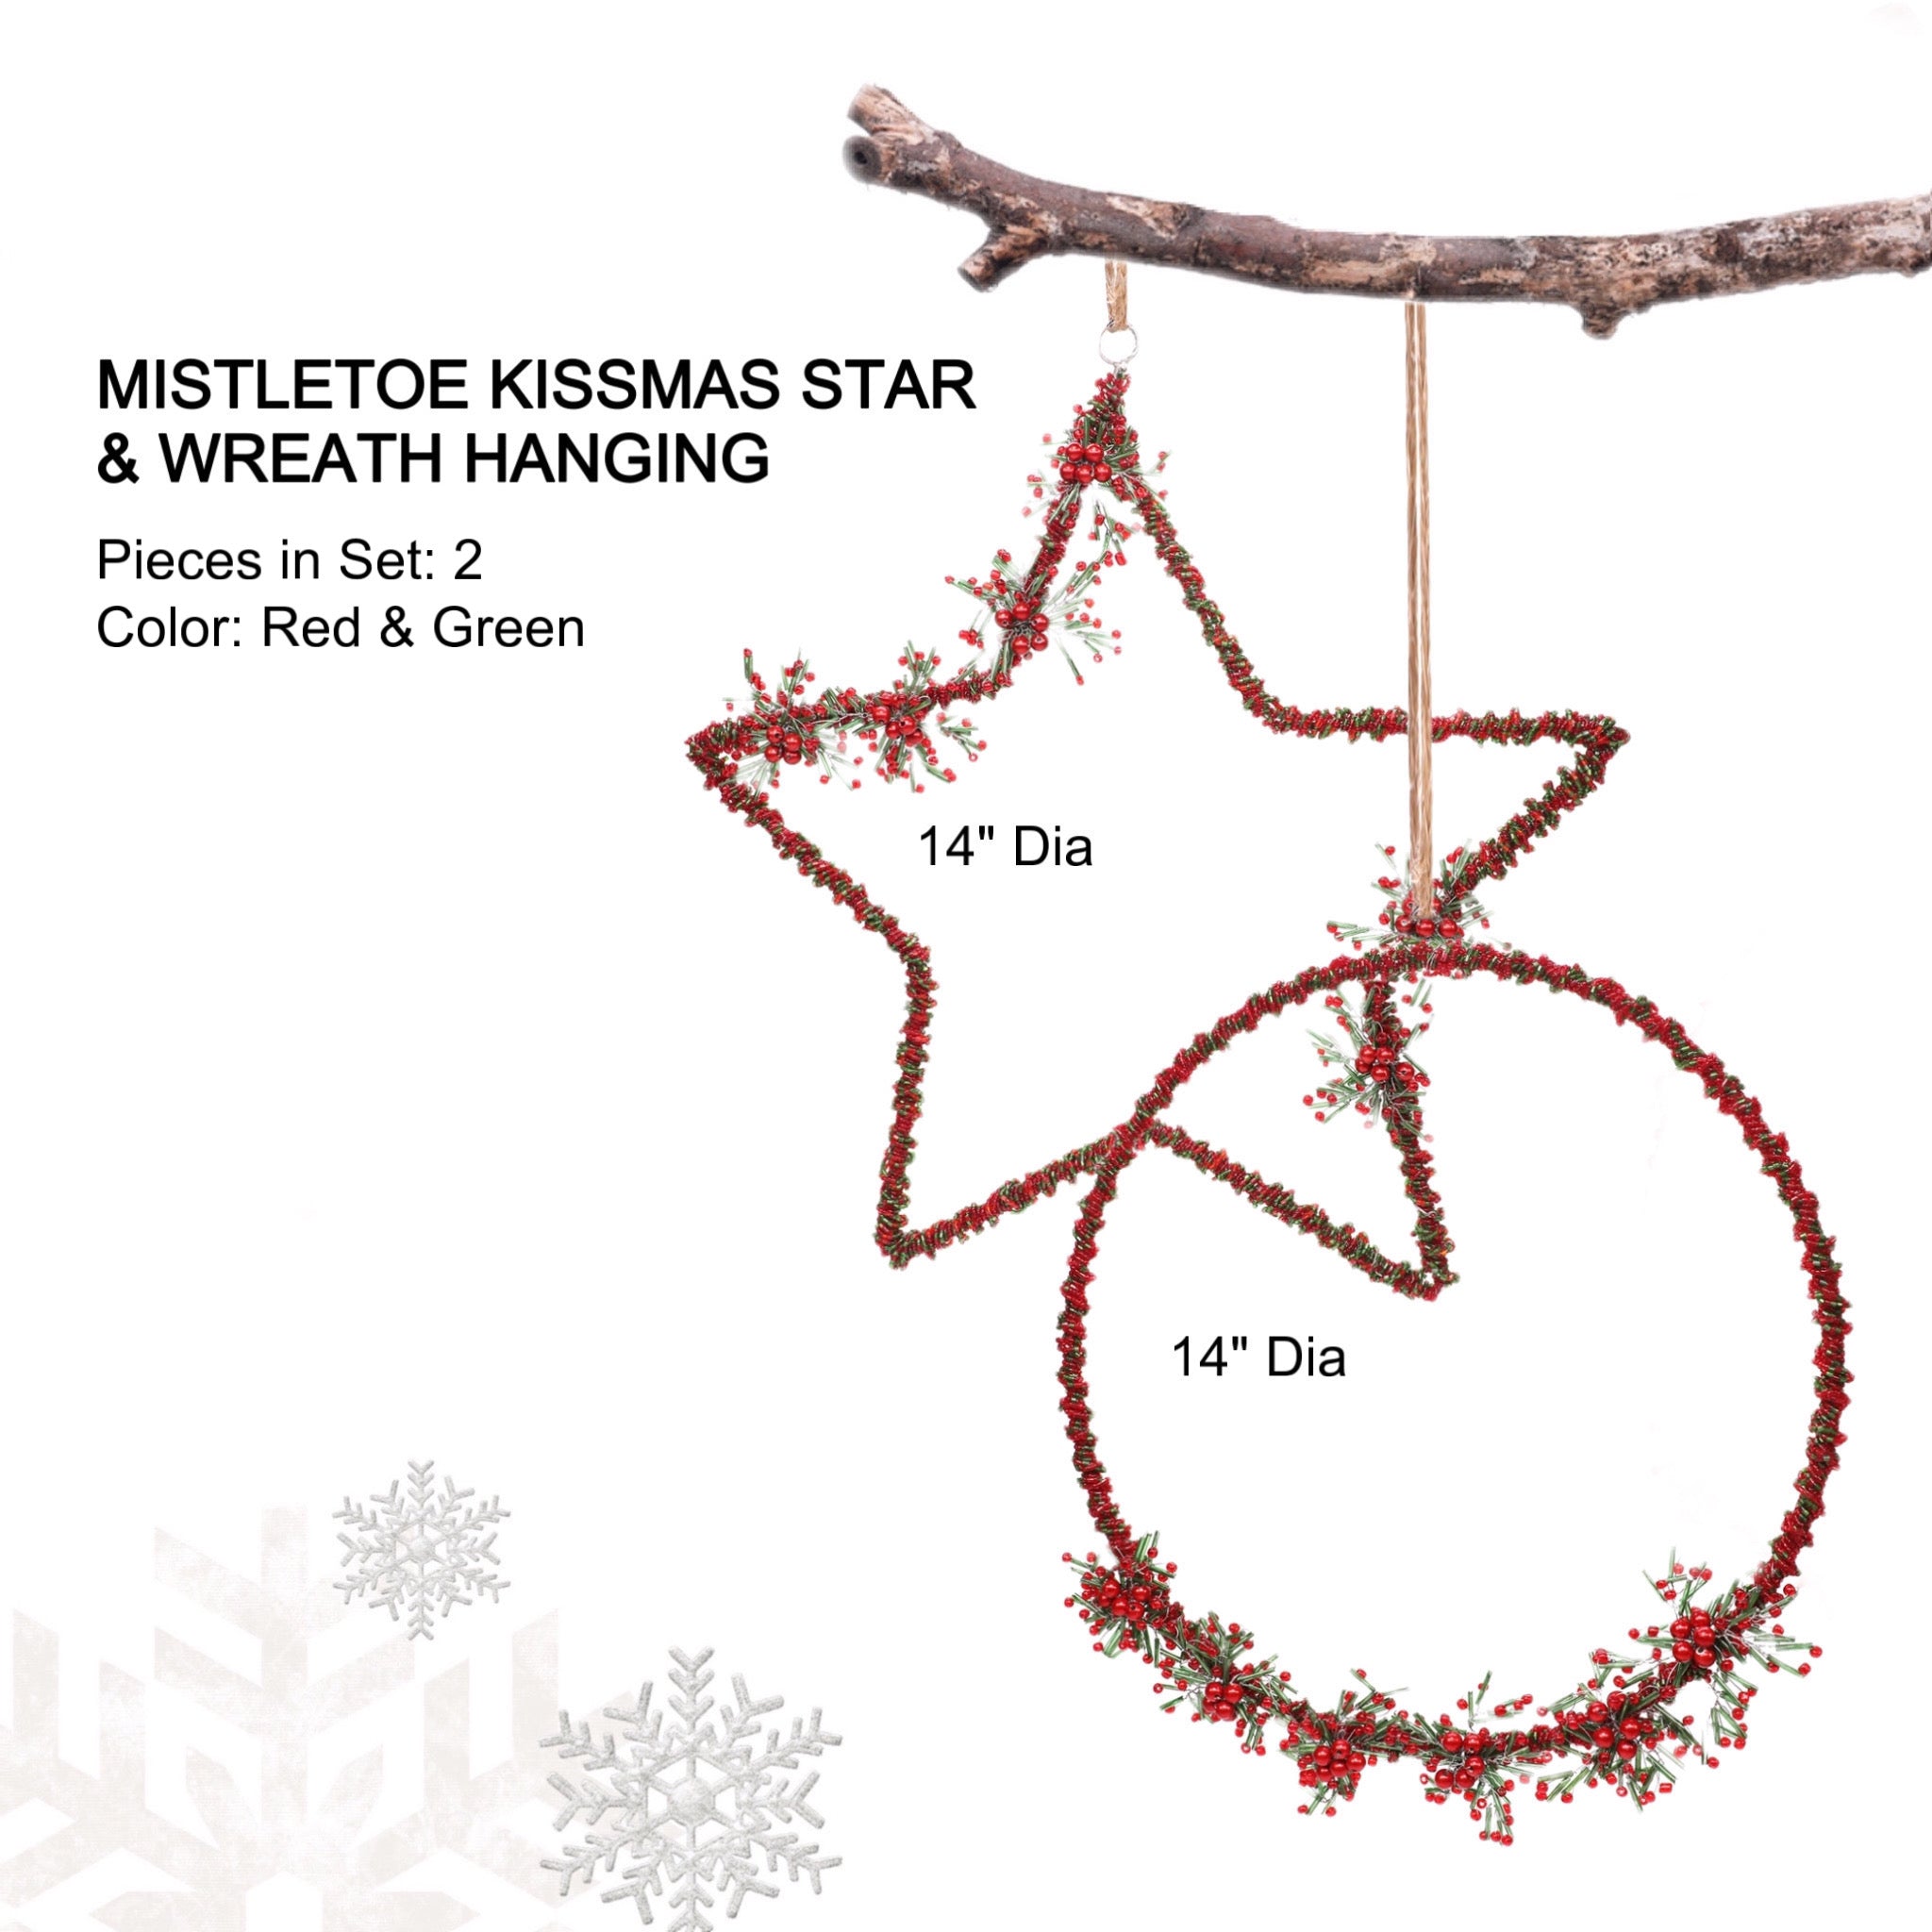 Mistletoe Kissmas Star & Wreath Hanging in Red & Green, Set of 2